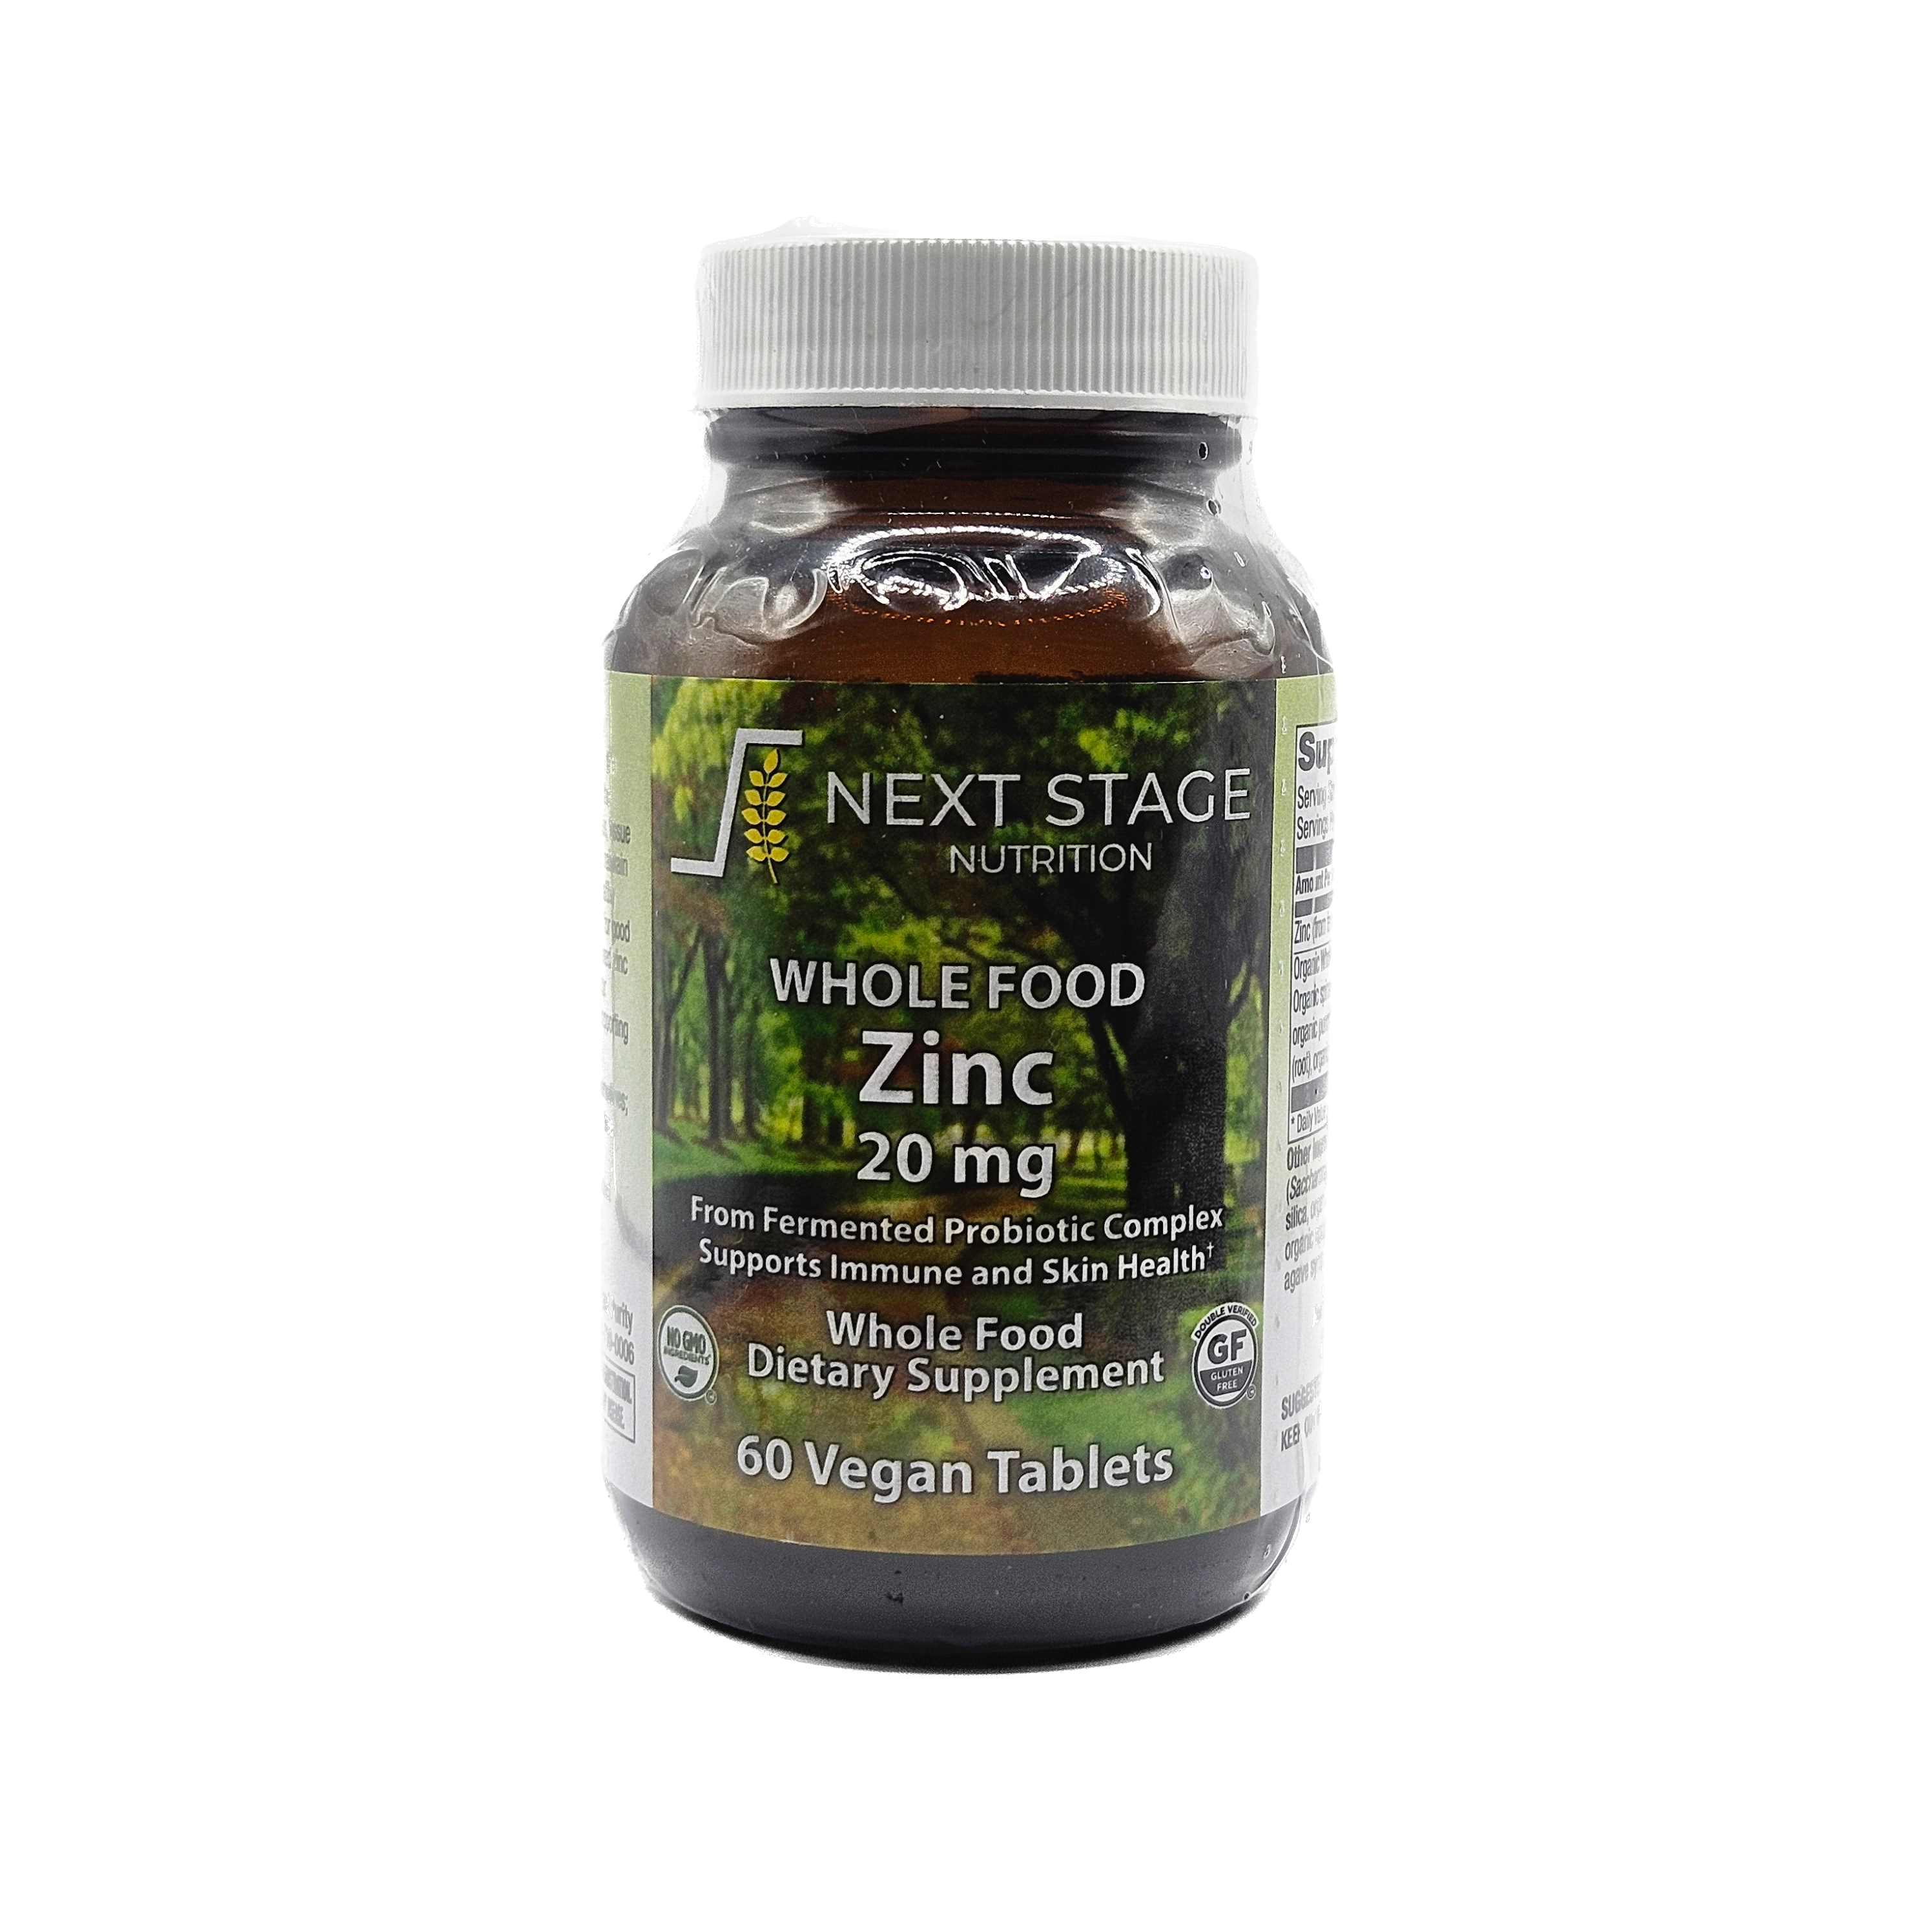 Next Stage Whole Food Zinc 20 mg